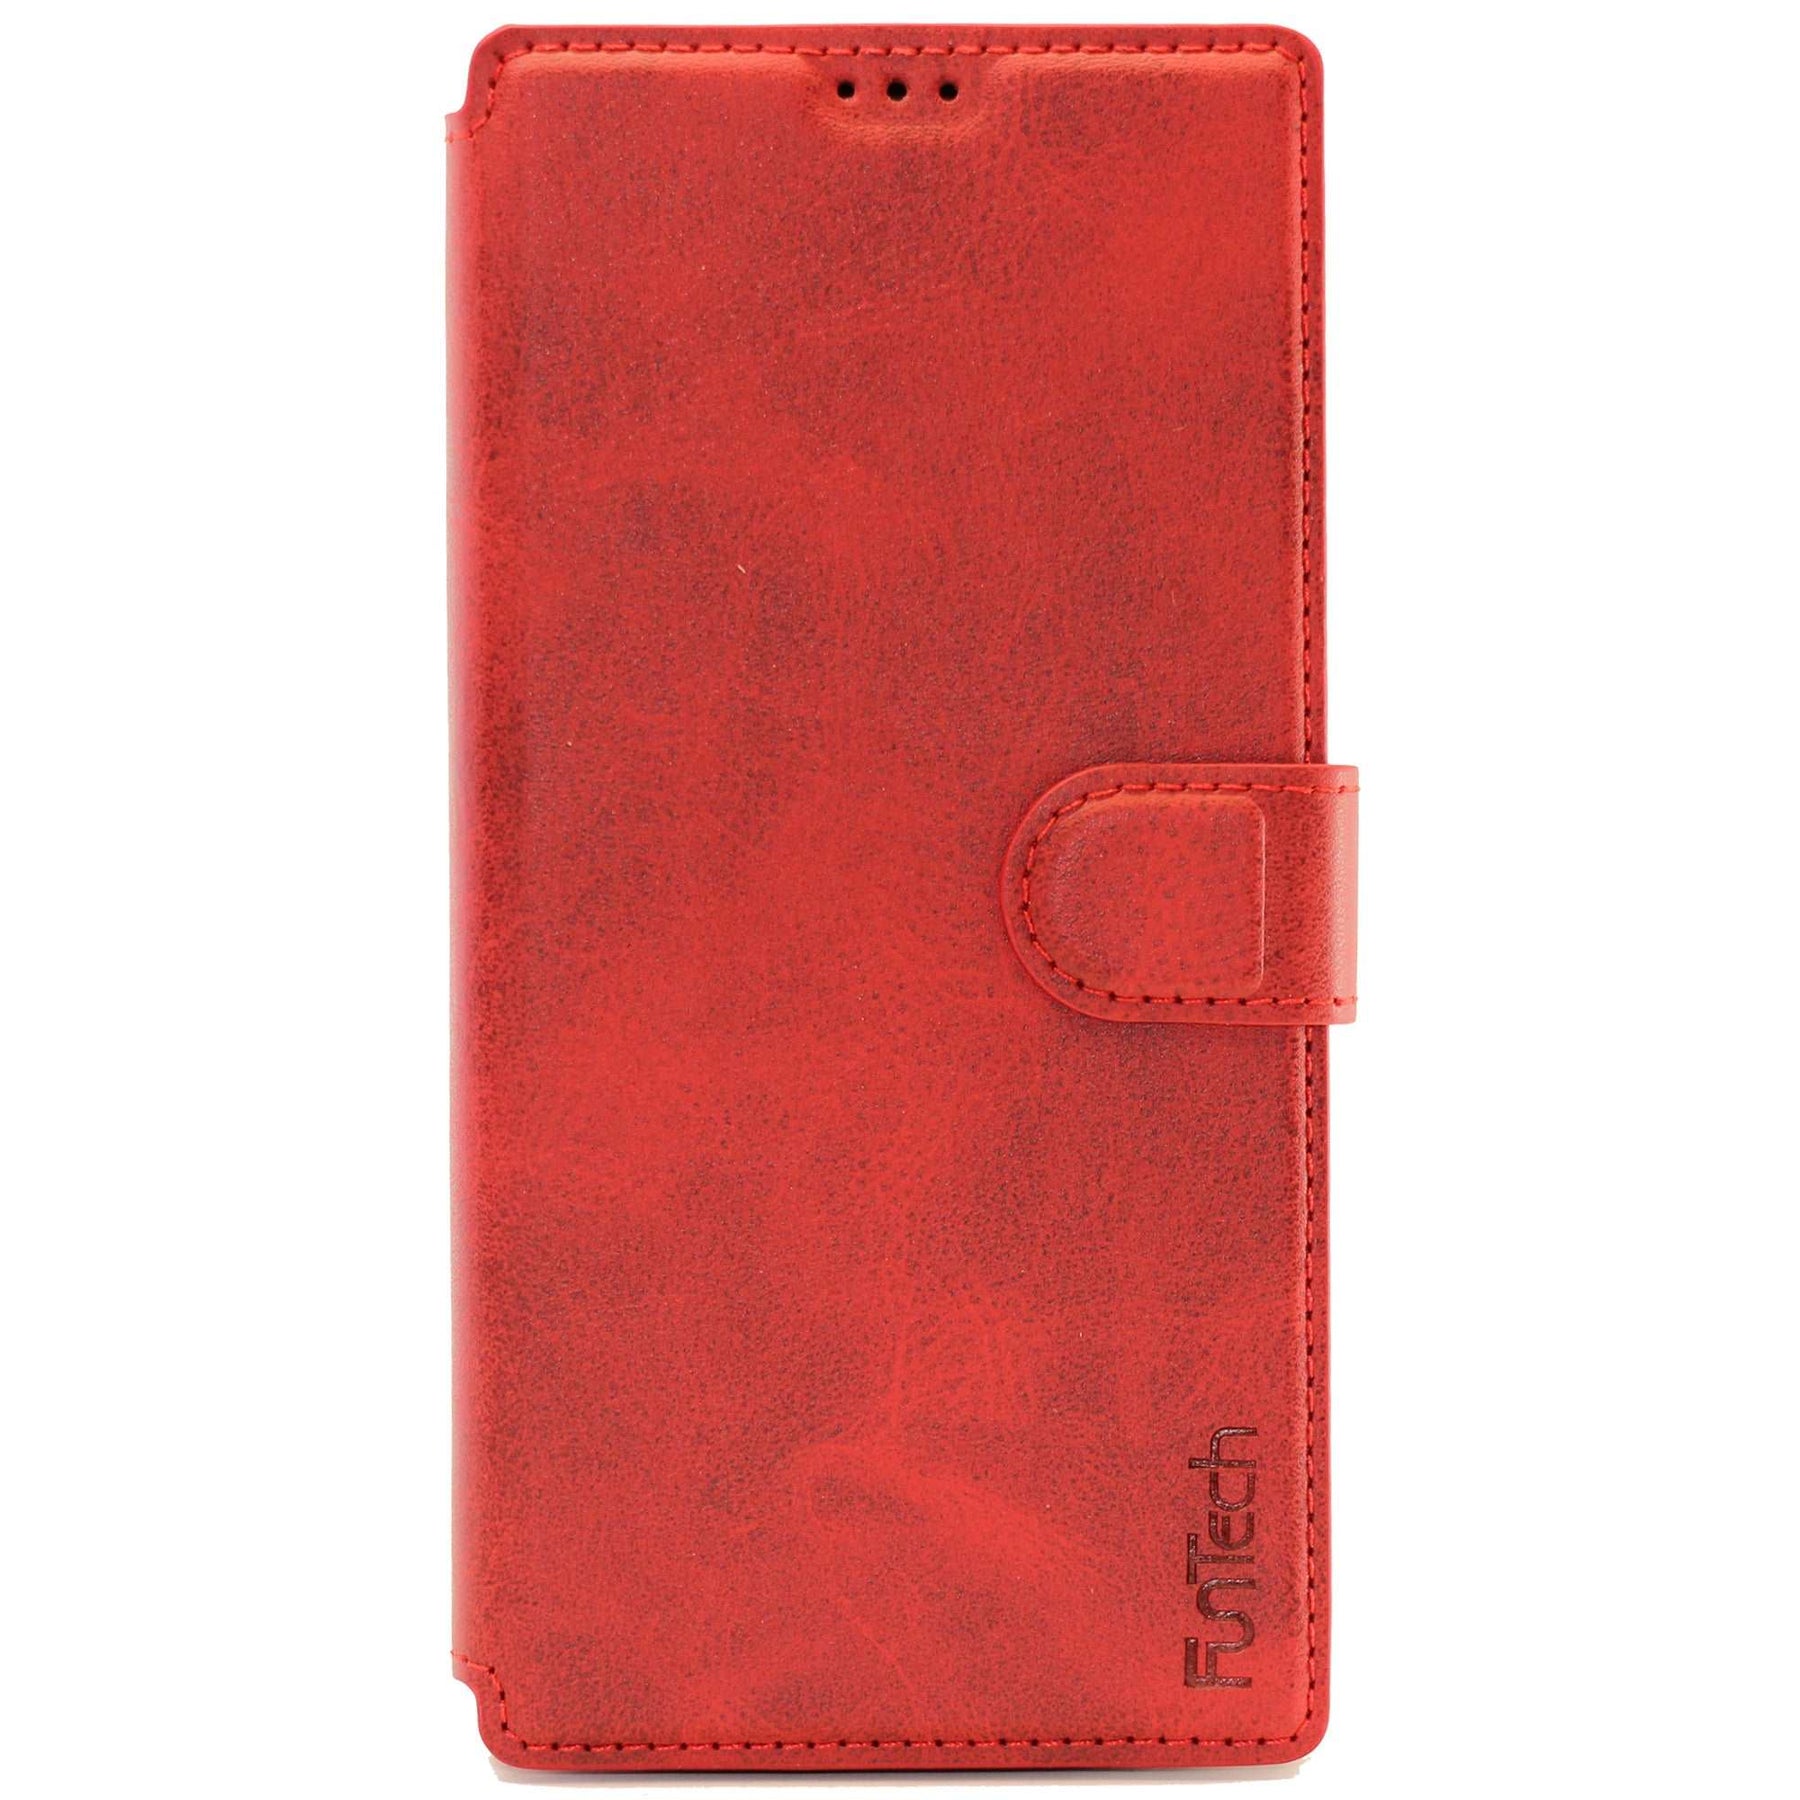 Samsung A21s Red wallet case